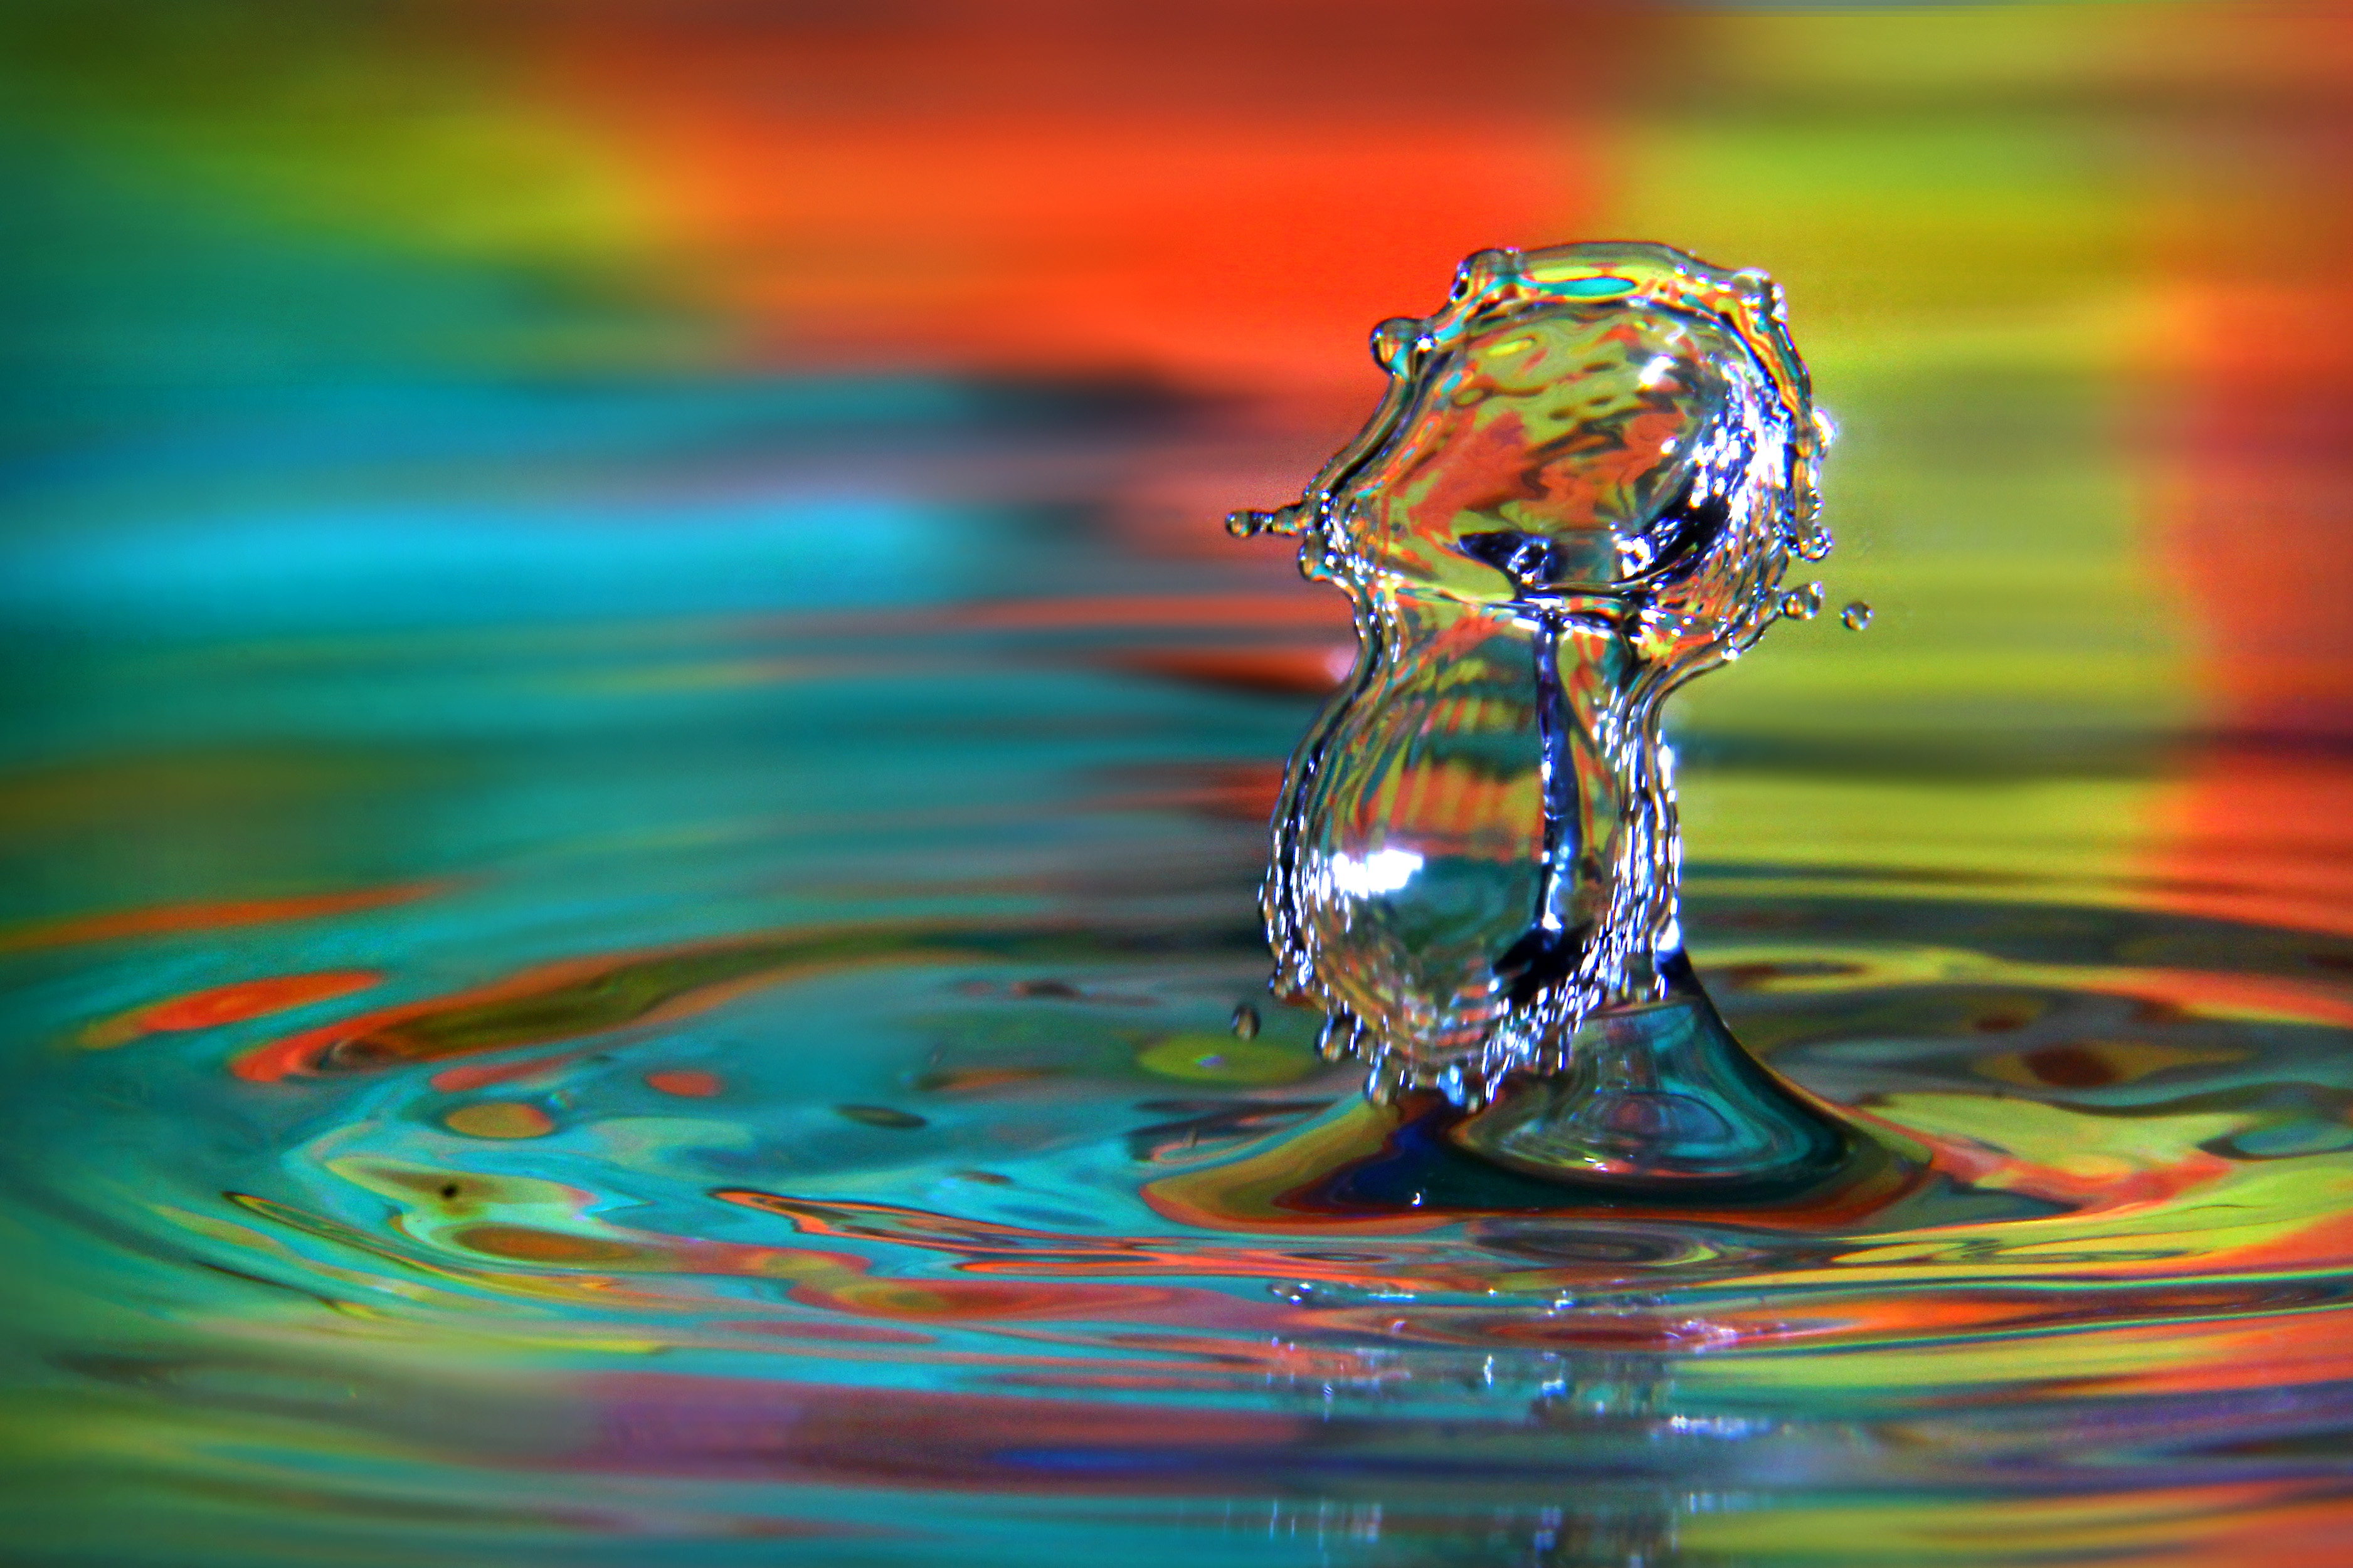 Water drop photo